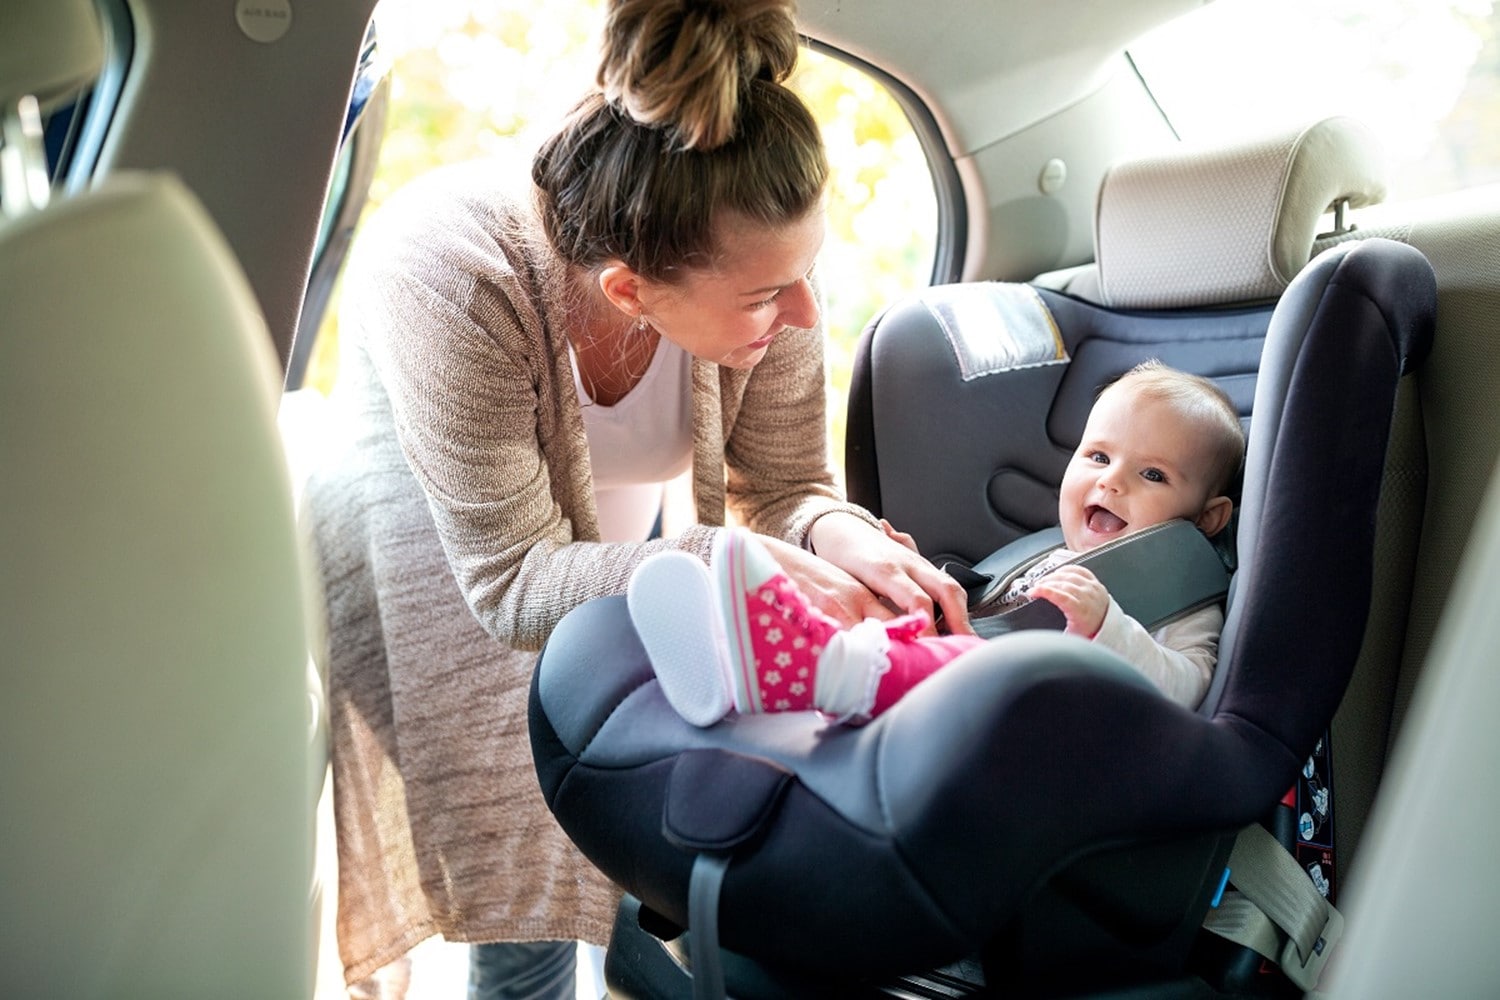 Child Car Seats in Hyundai